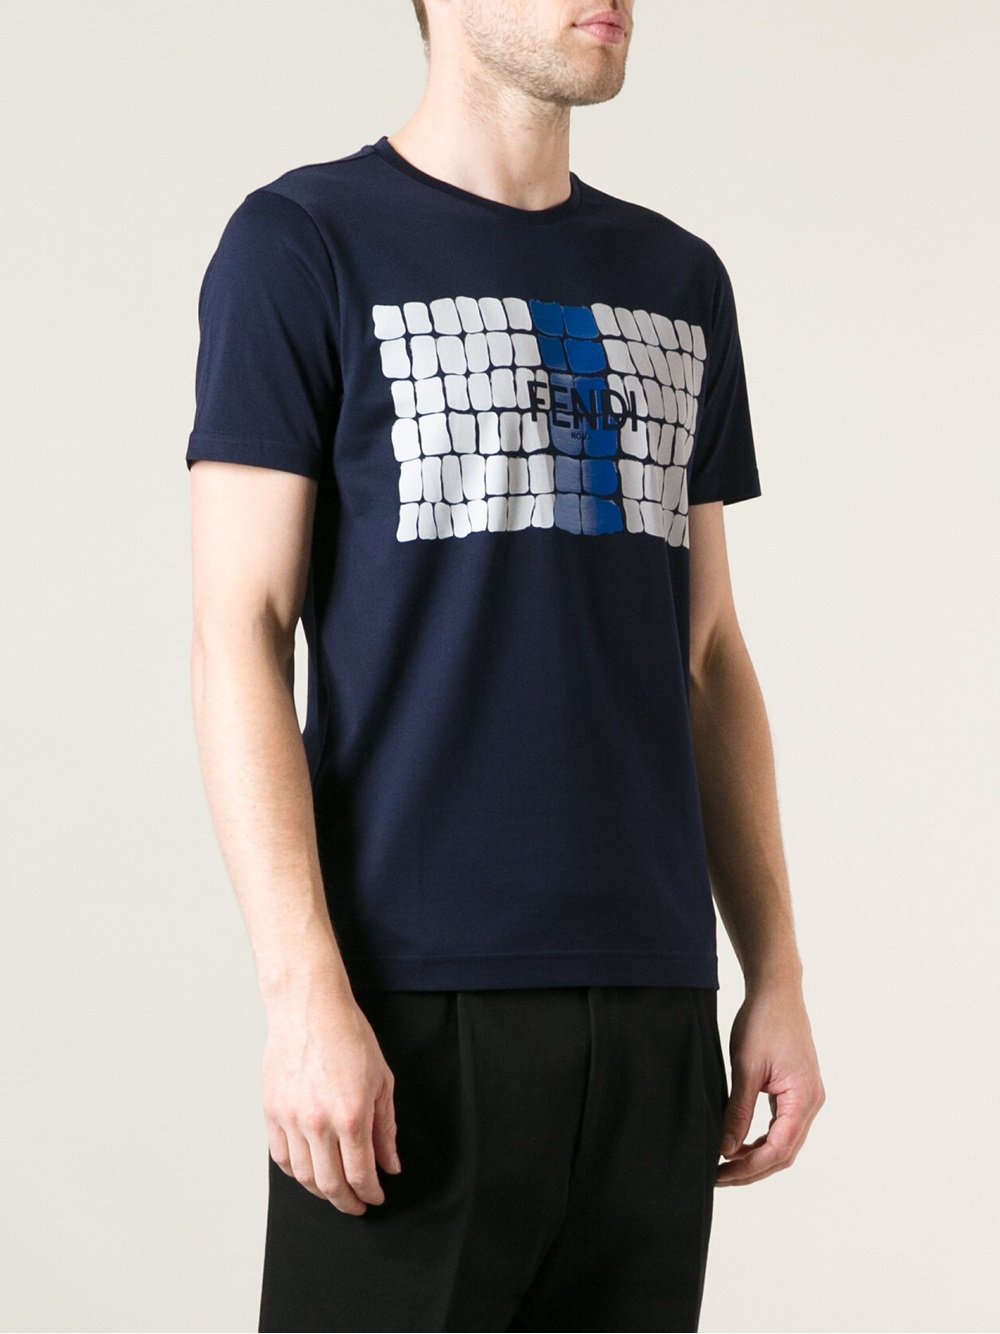 Lyst - Fendi Logo Squares Print T-Shirt in Blue for Men